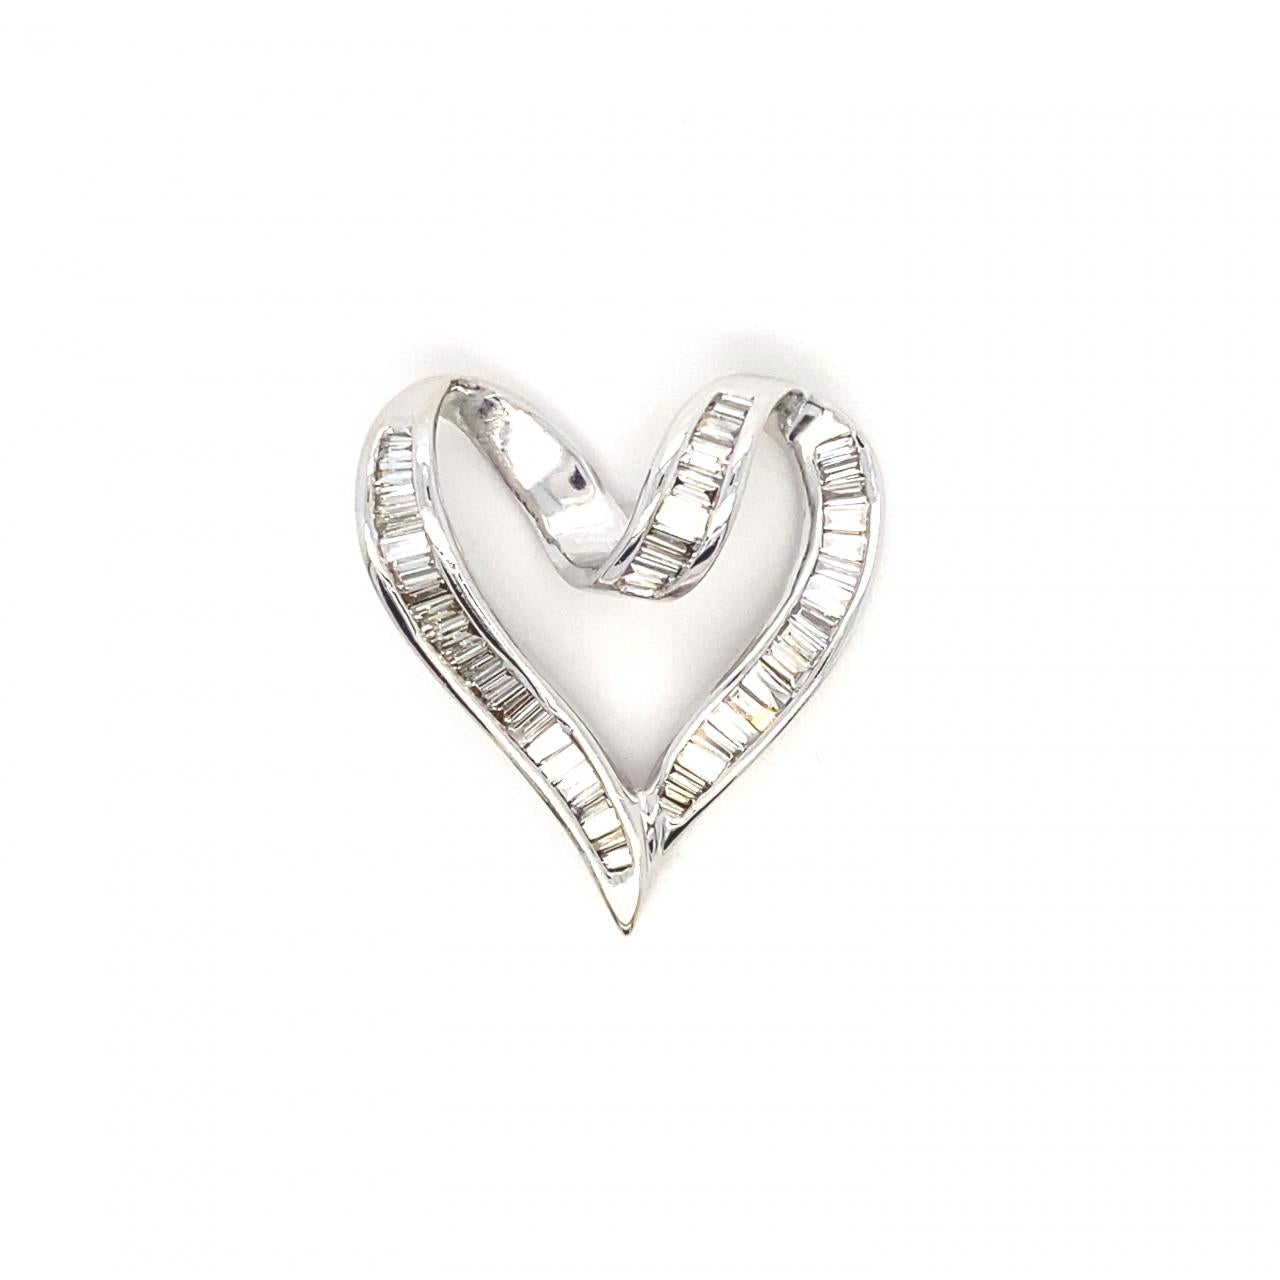 1.75ctw Baguette Cut Diamond Heart Shape Pendant 14K White Gold